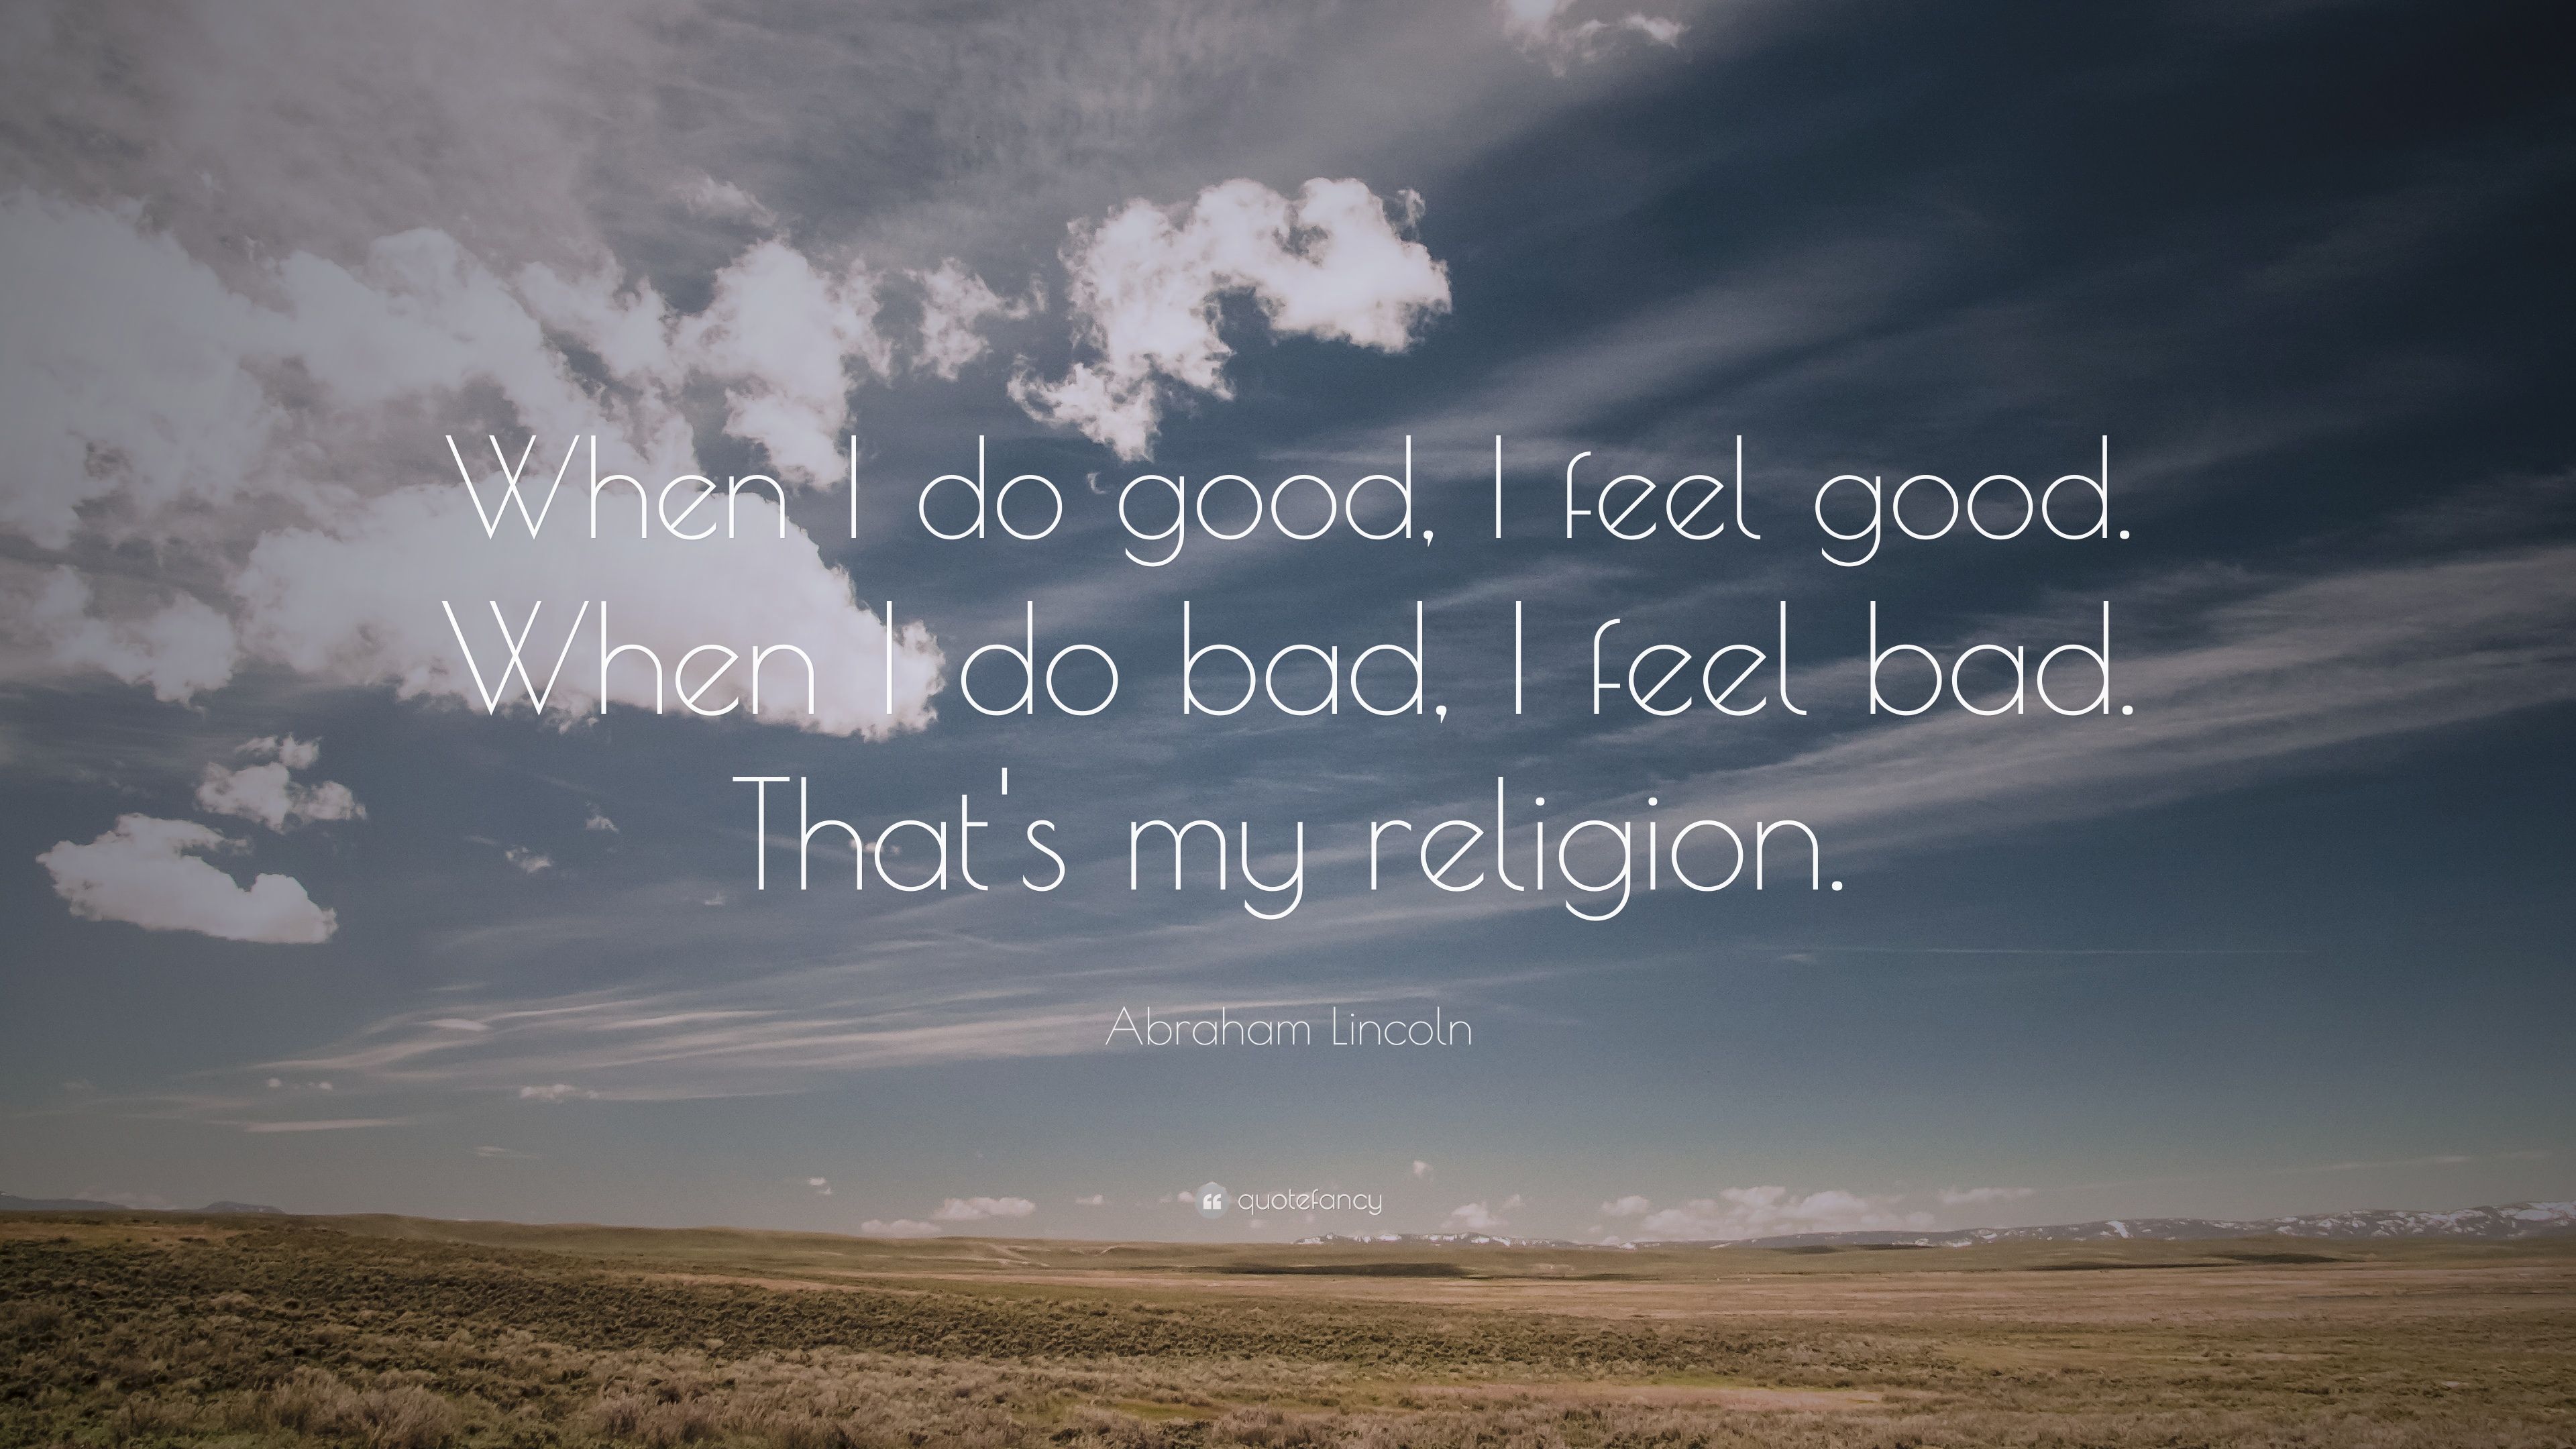 Abraham Lincoln Quote: “When I do good, I feel good. When I do bad